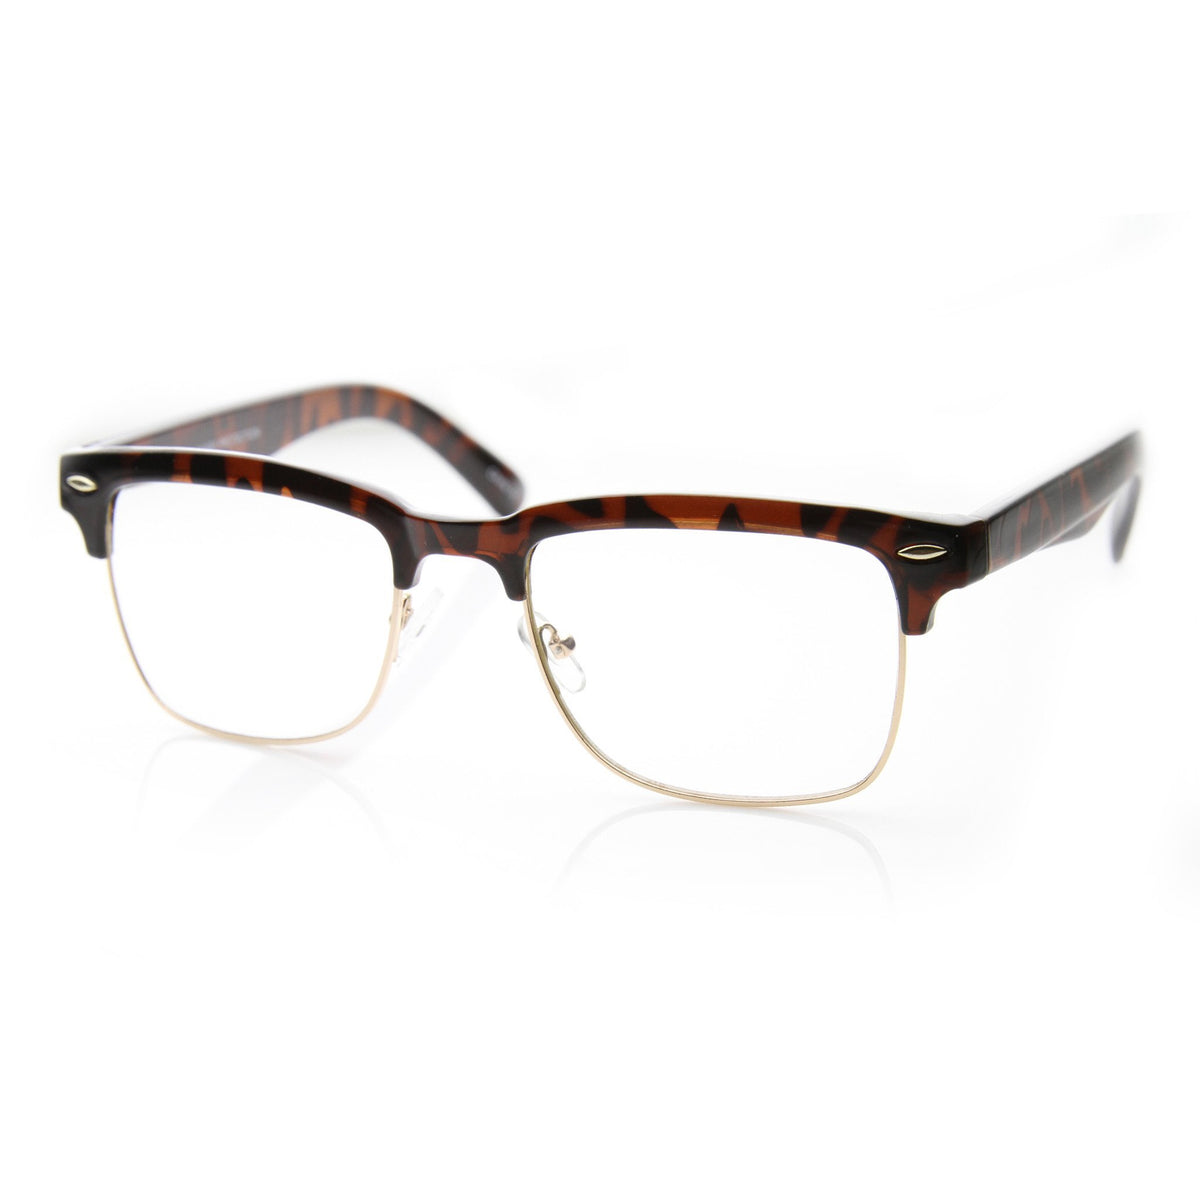 Vintage Inspired Horned Rim Half Frame Clear Lens Glasses